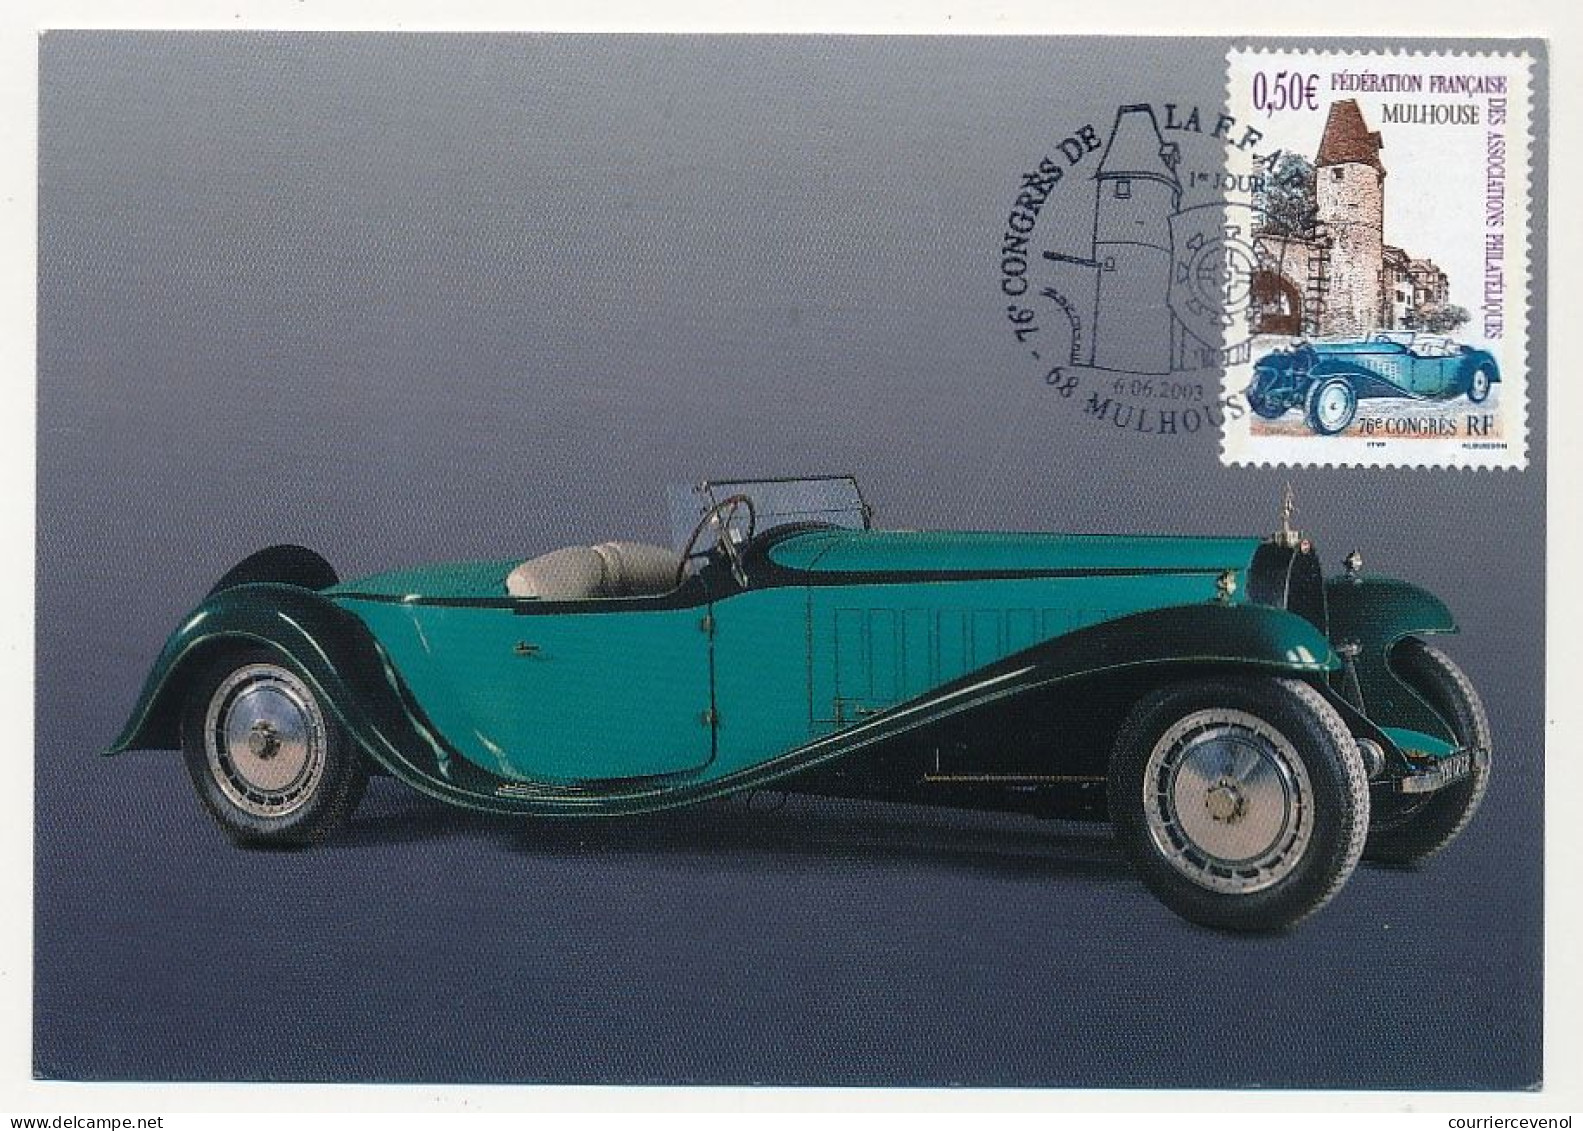 FRANCE - Carte Maximum - 0,50 Bugatti Collection Schlumpf - MULHOUSE - 6/6/2003 - 2000-2009